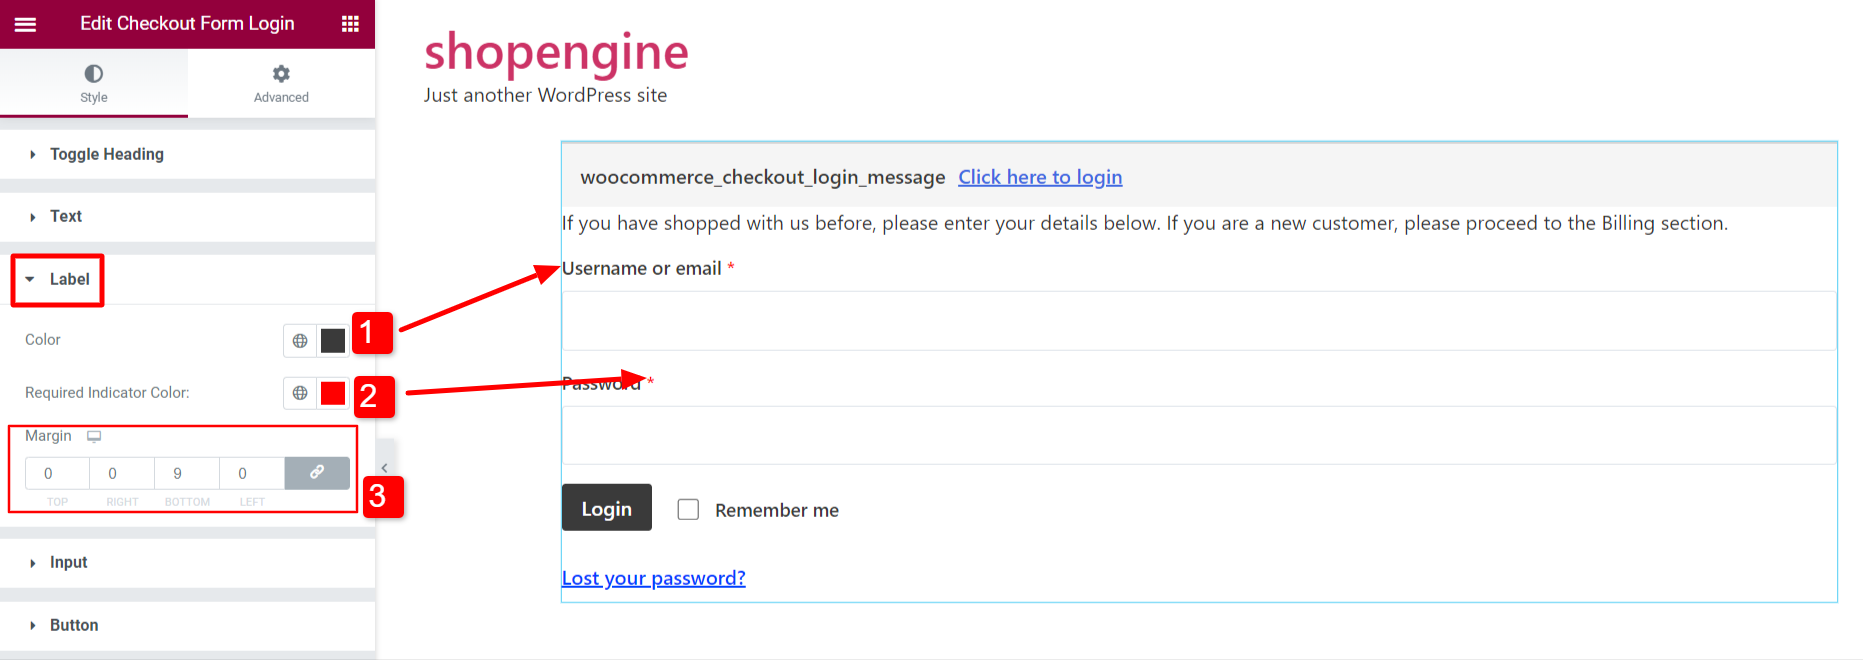 customize label backgound of checkout login form